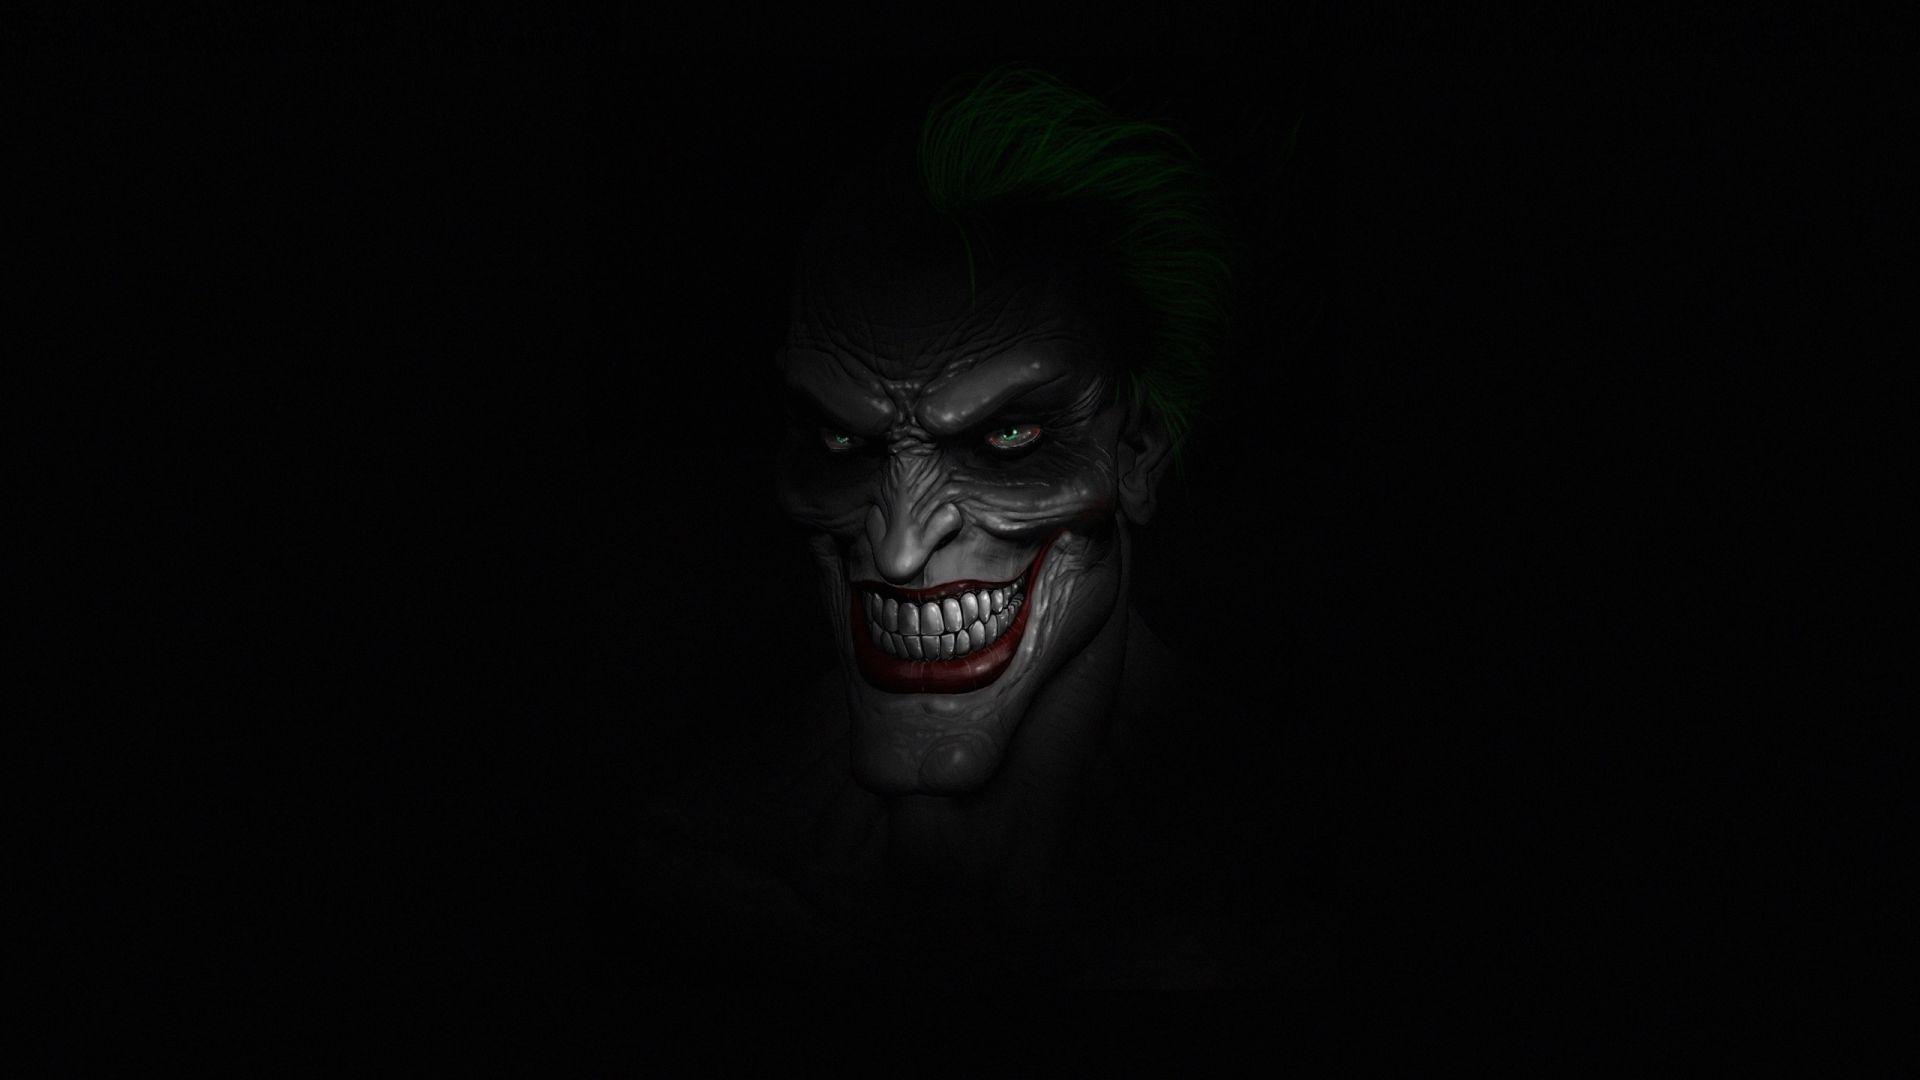 Joker Half Face Wallpapers - Top Free Joker Half Face Backgrounds ...